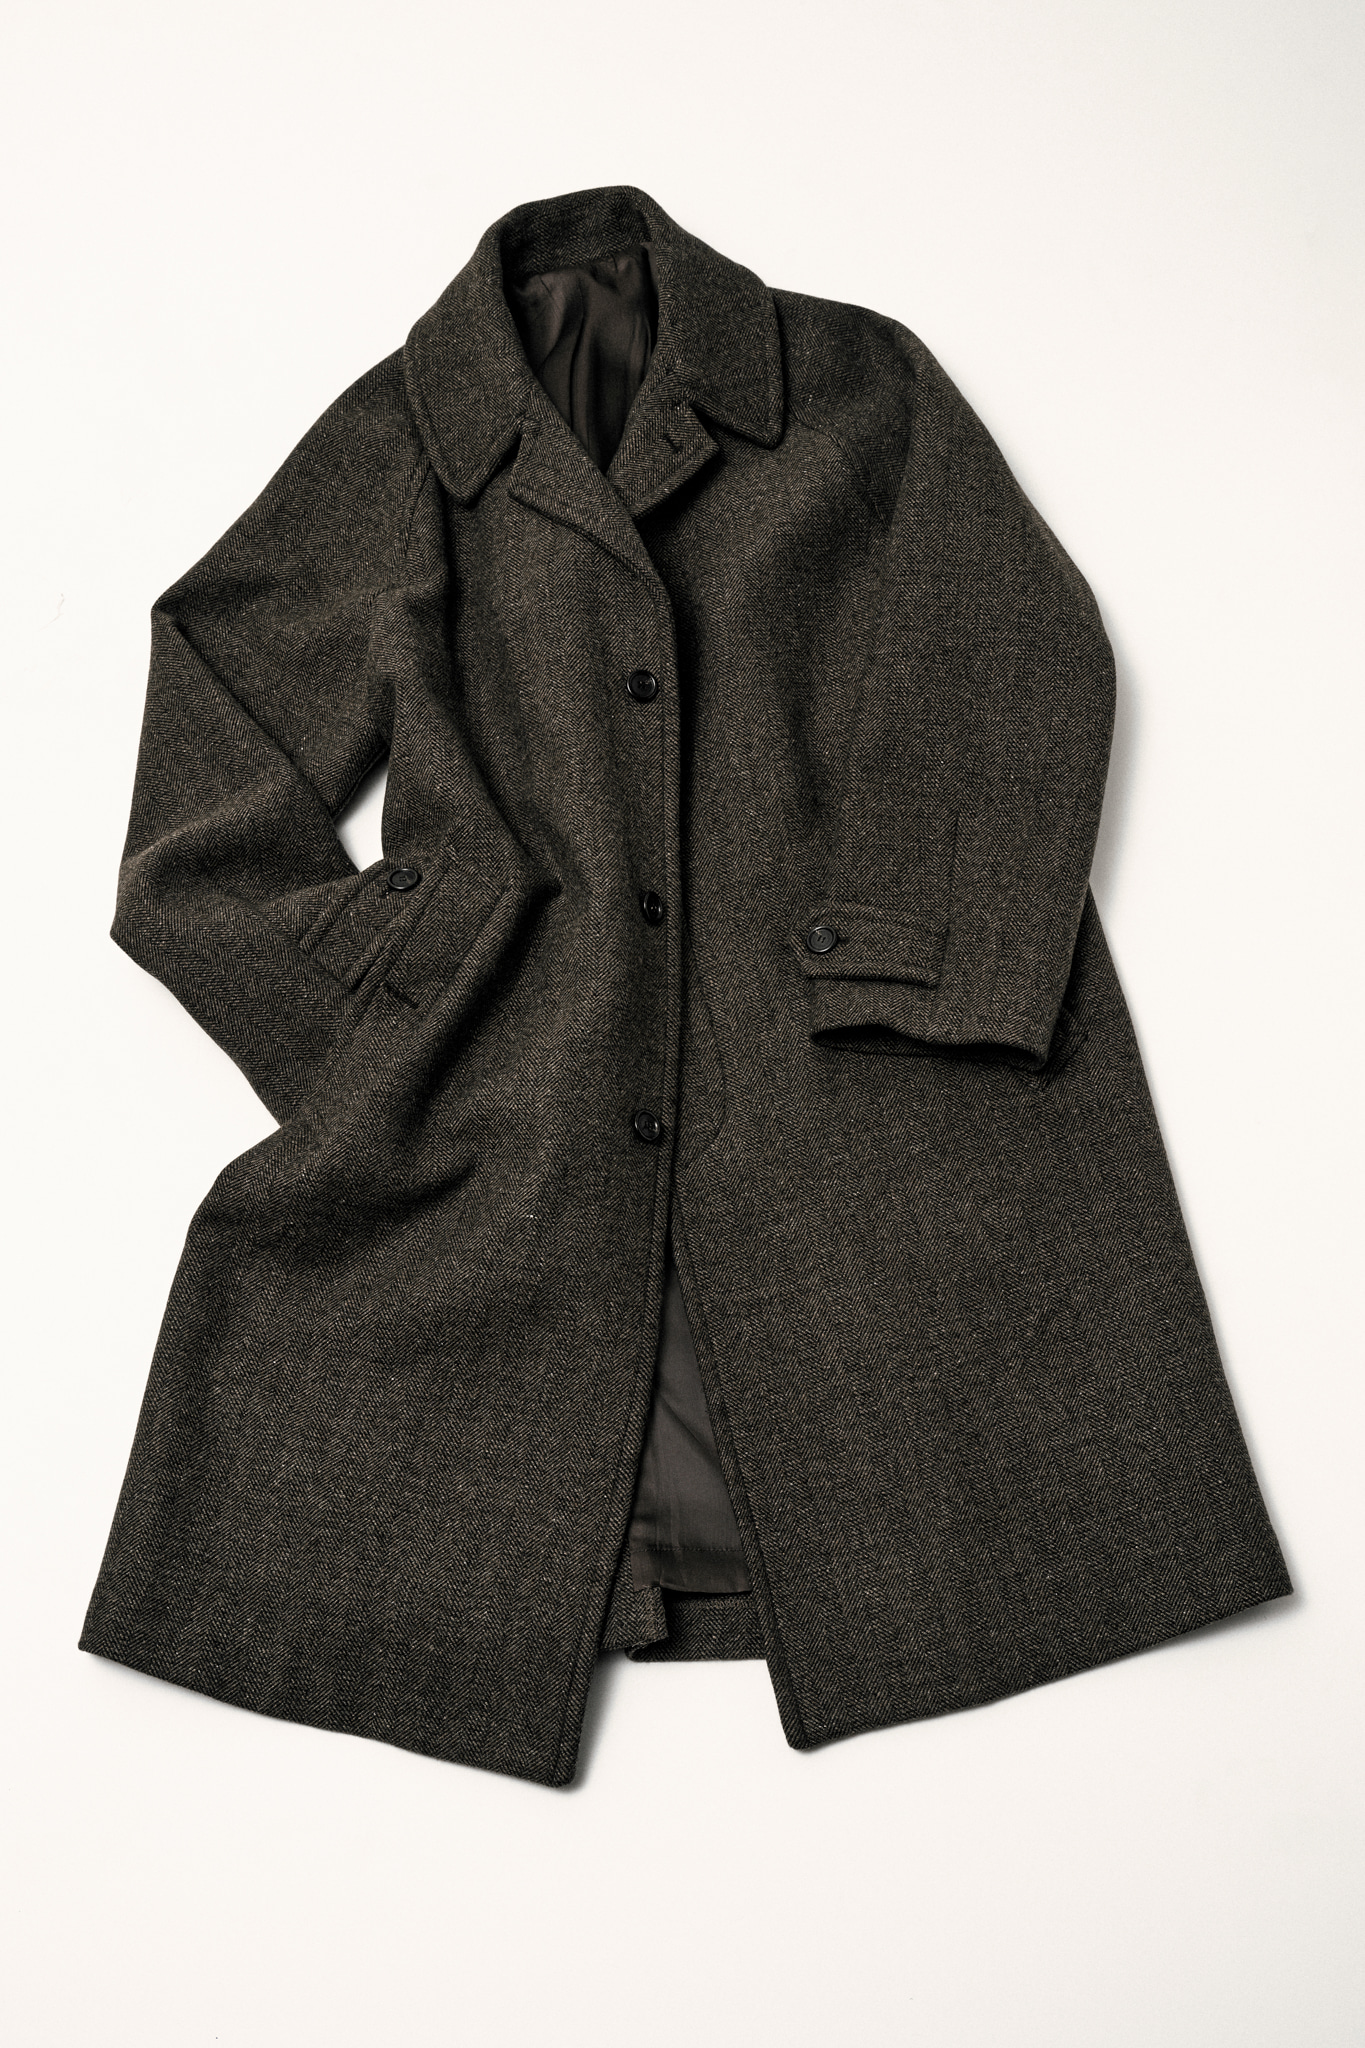 Raglan Coat (brown)PINOMARE(피노마레)